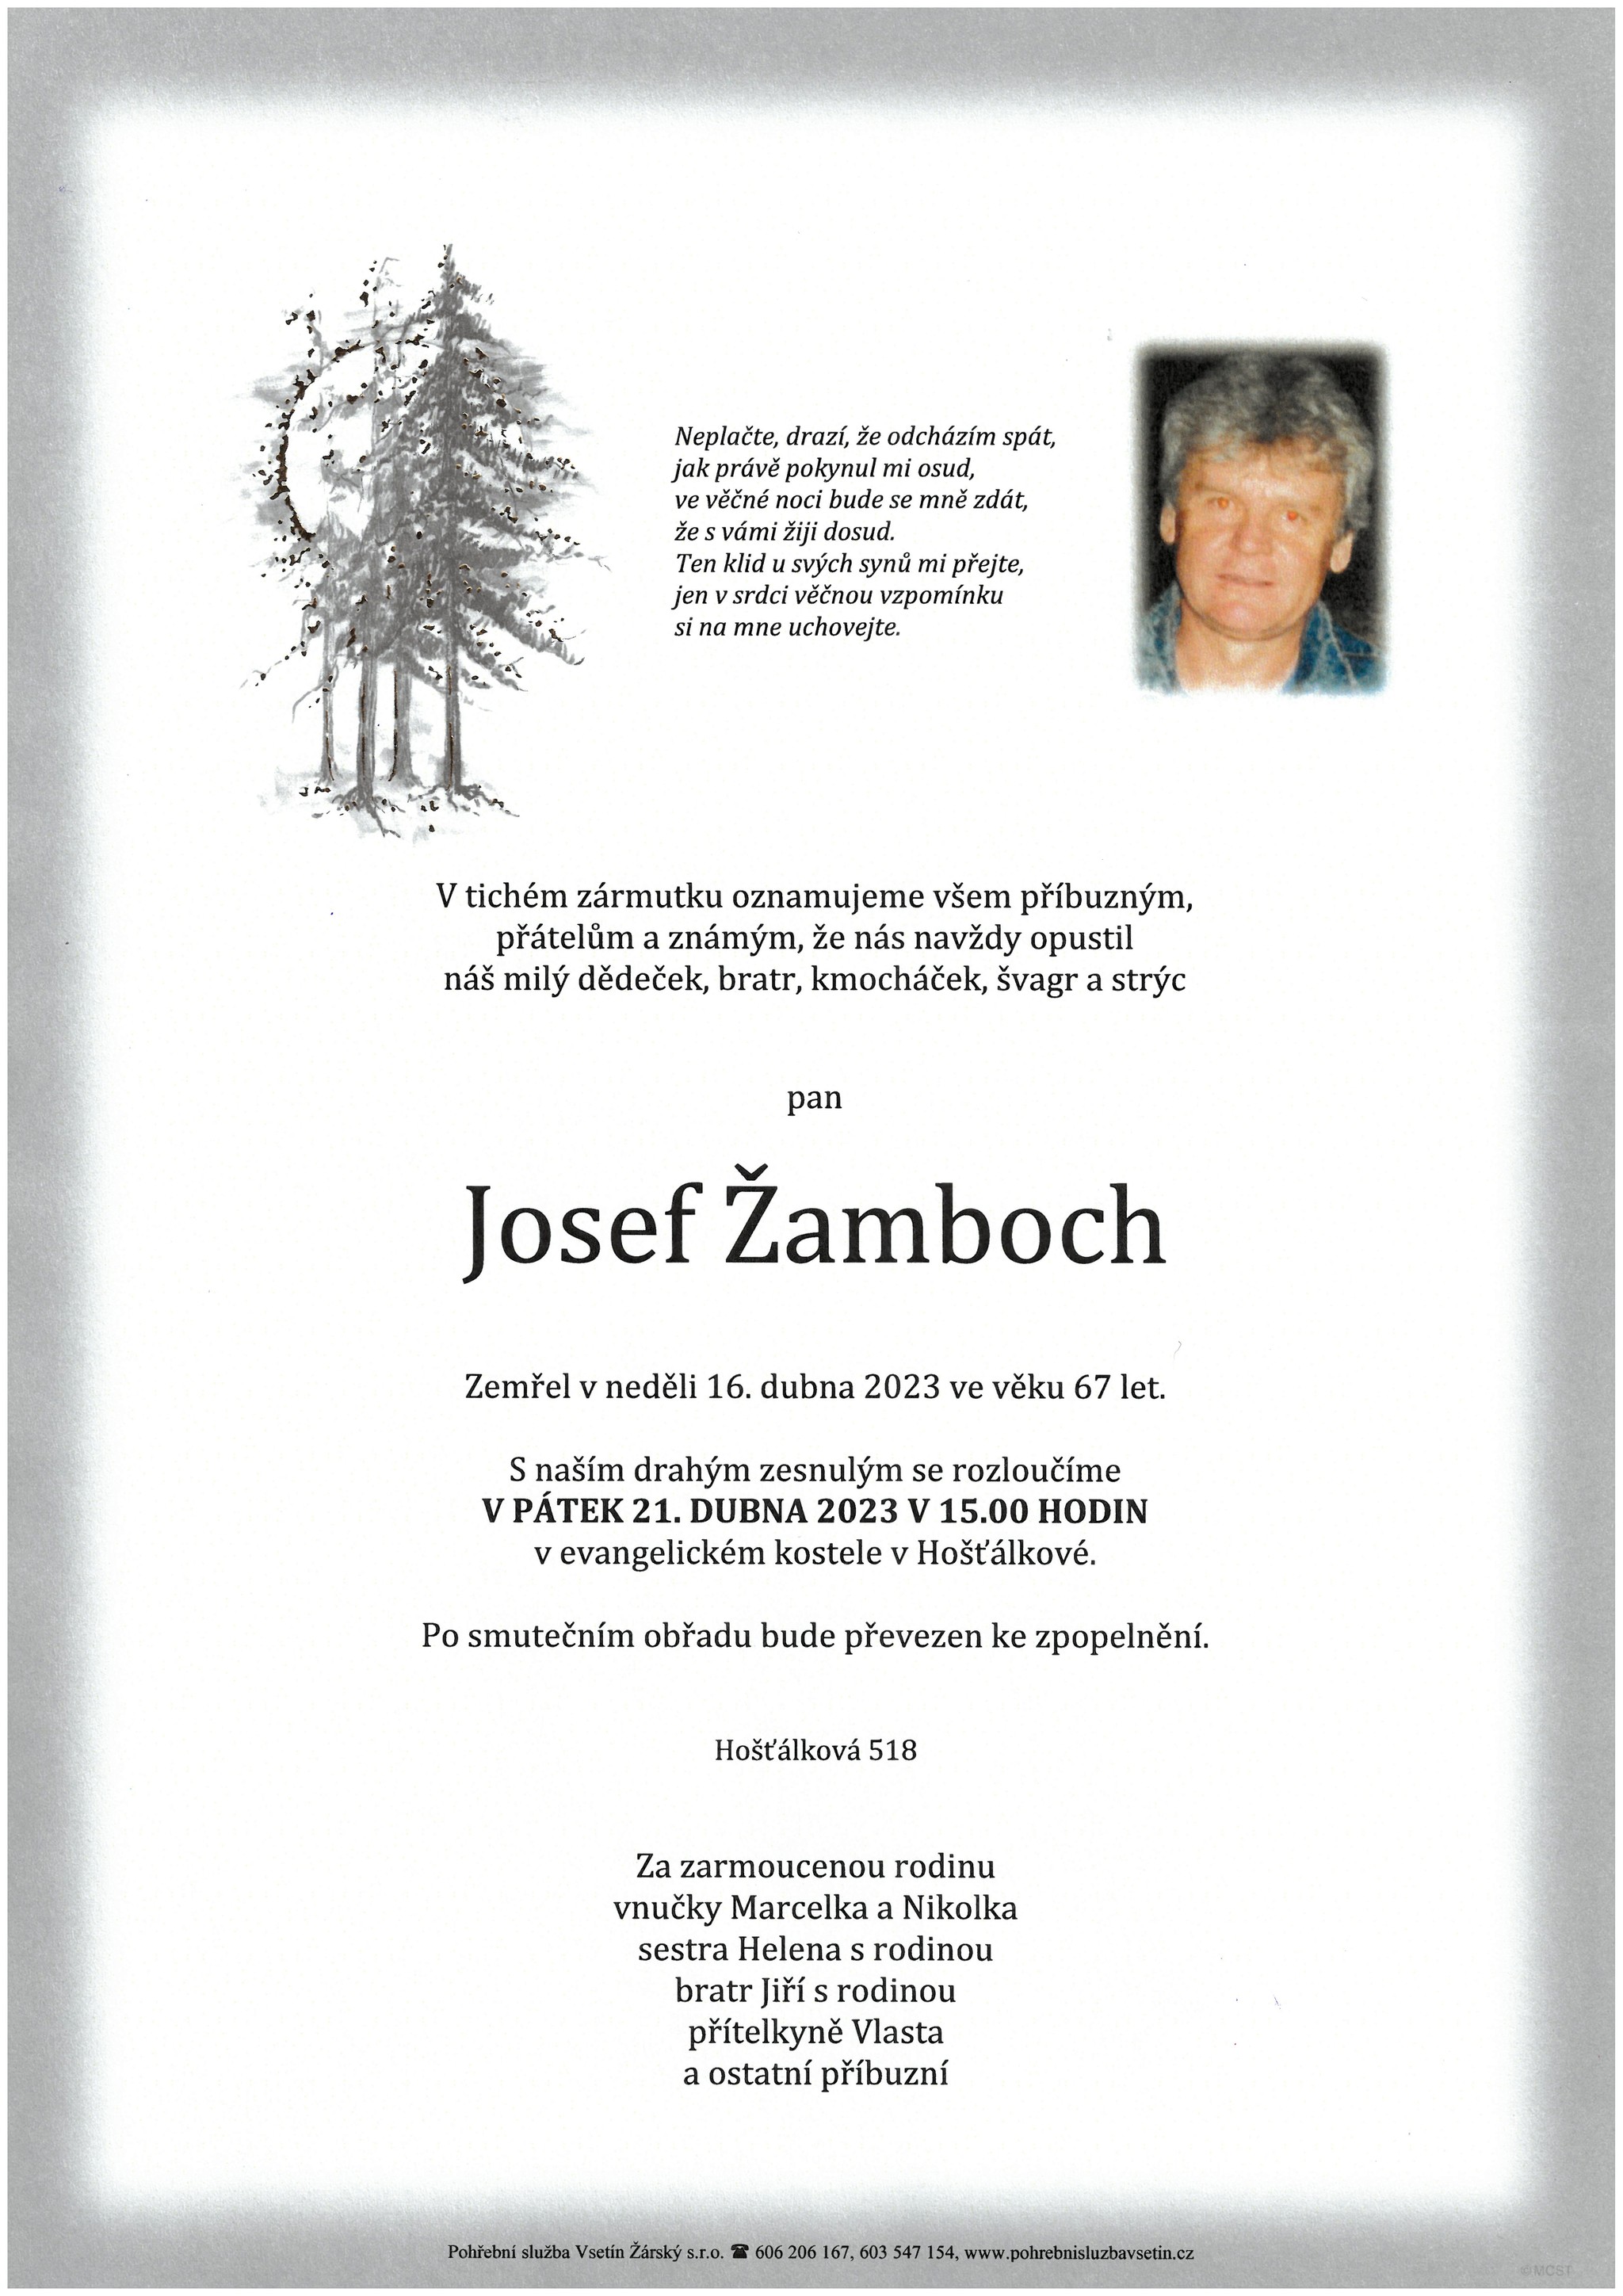 Josef Žamboch